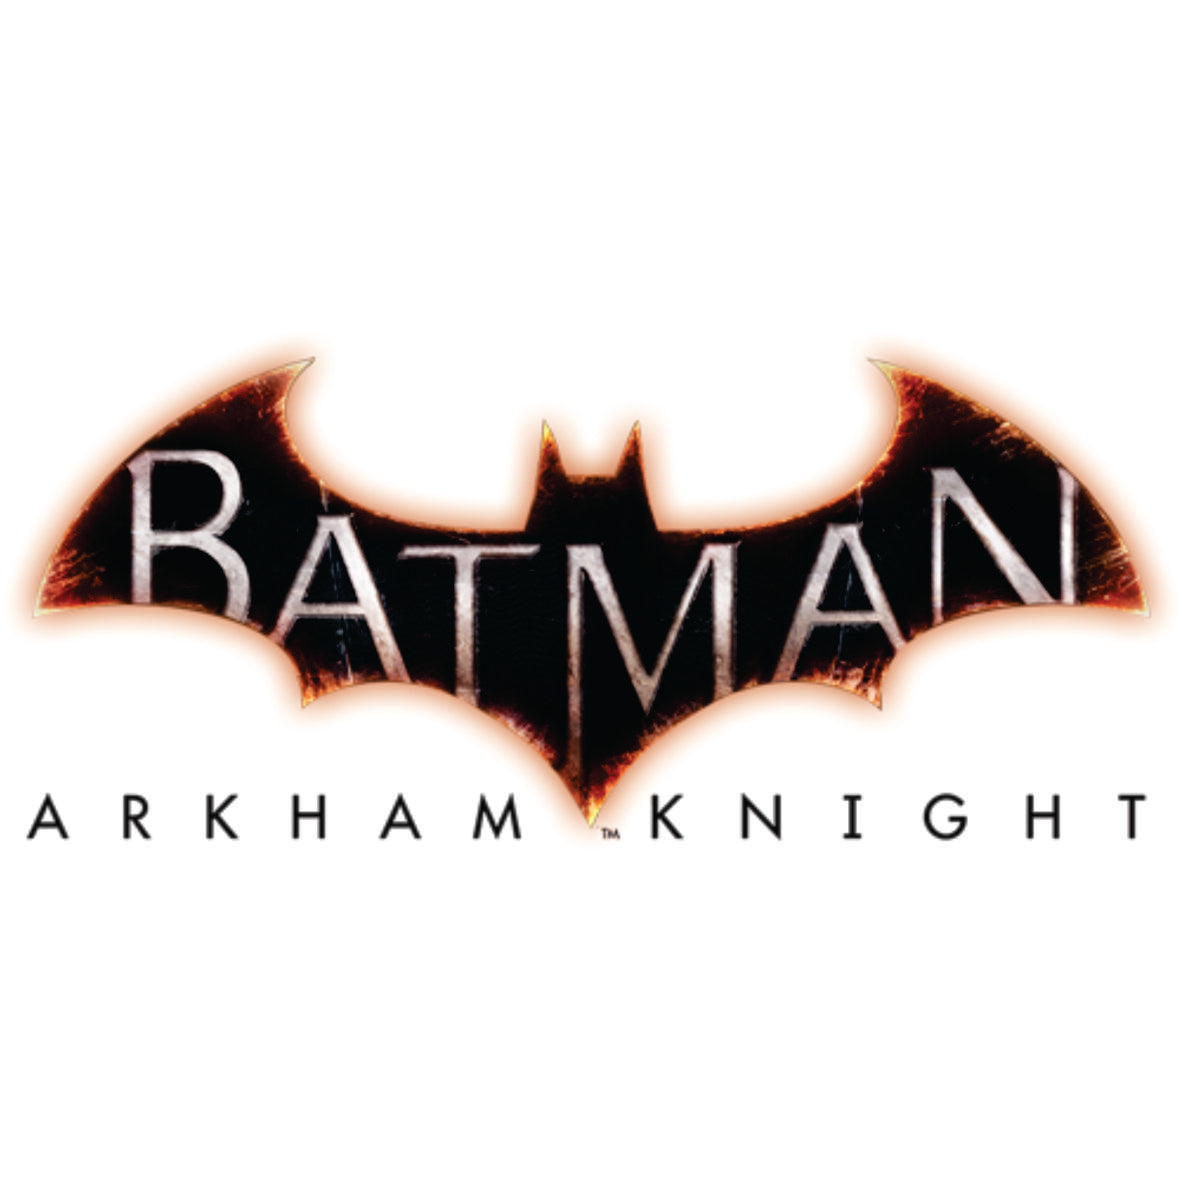 Arkham Knight